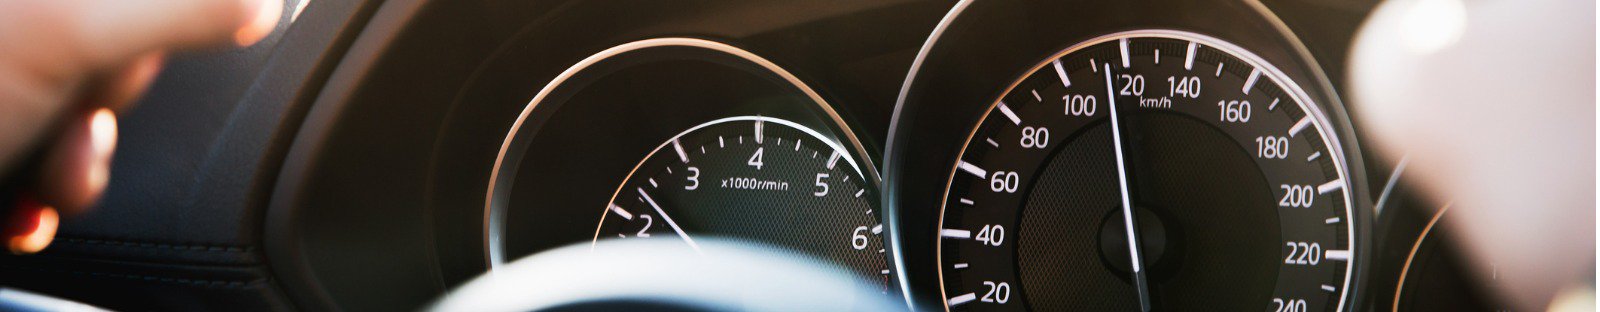 Car speedometer close up